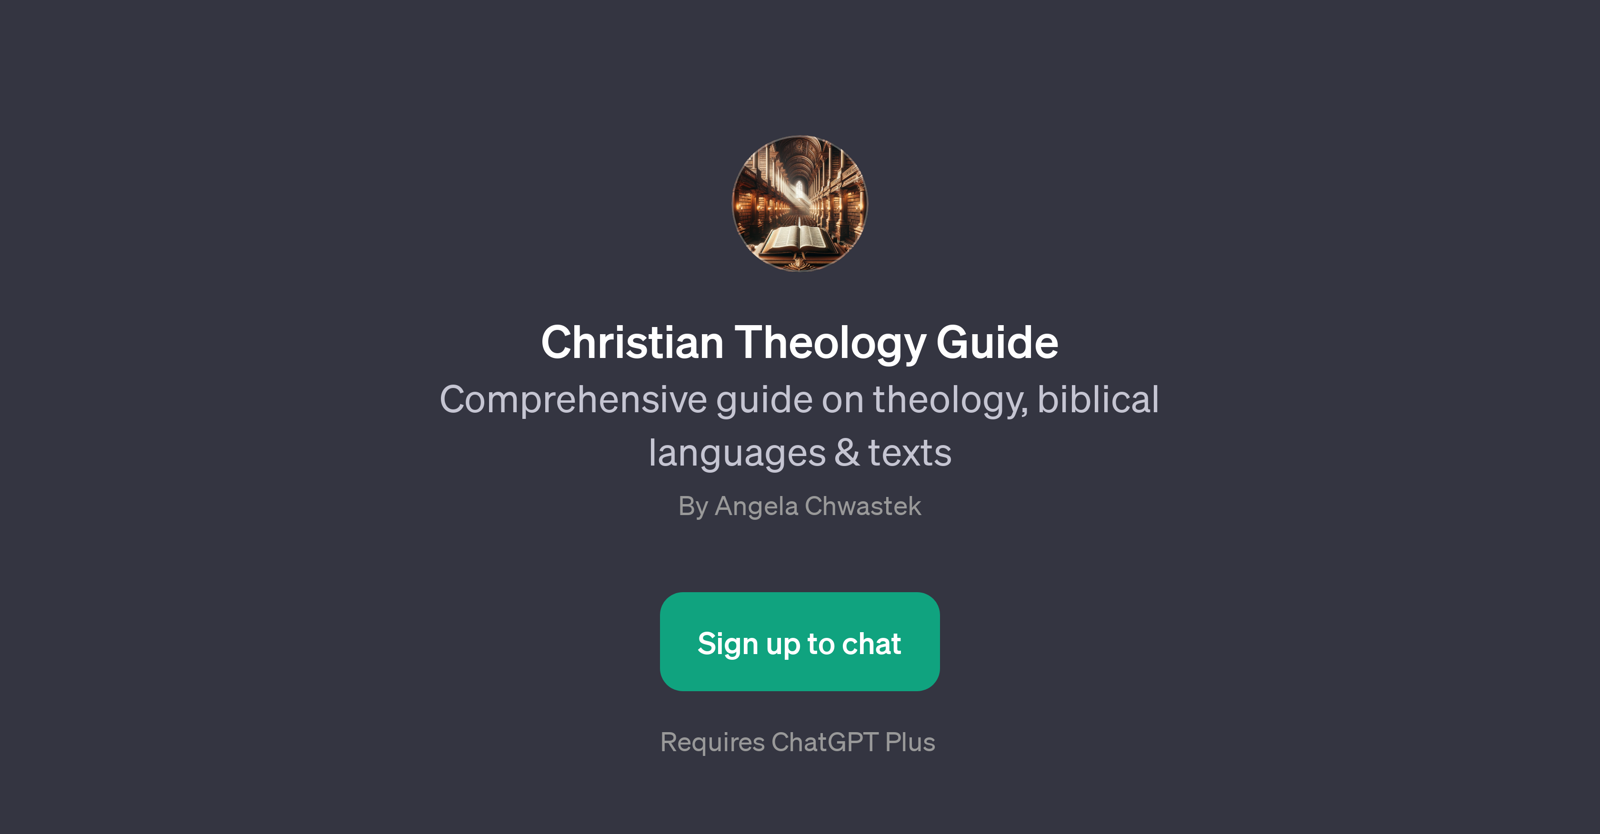 Christian Theology Guide website